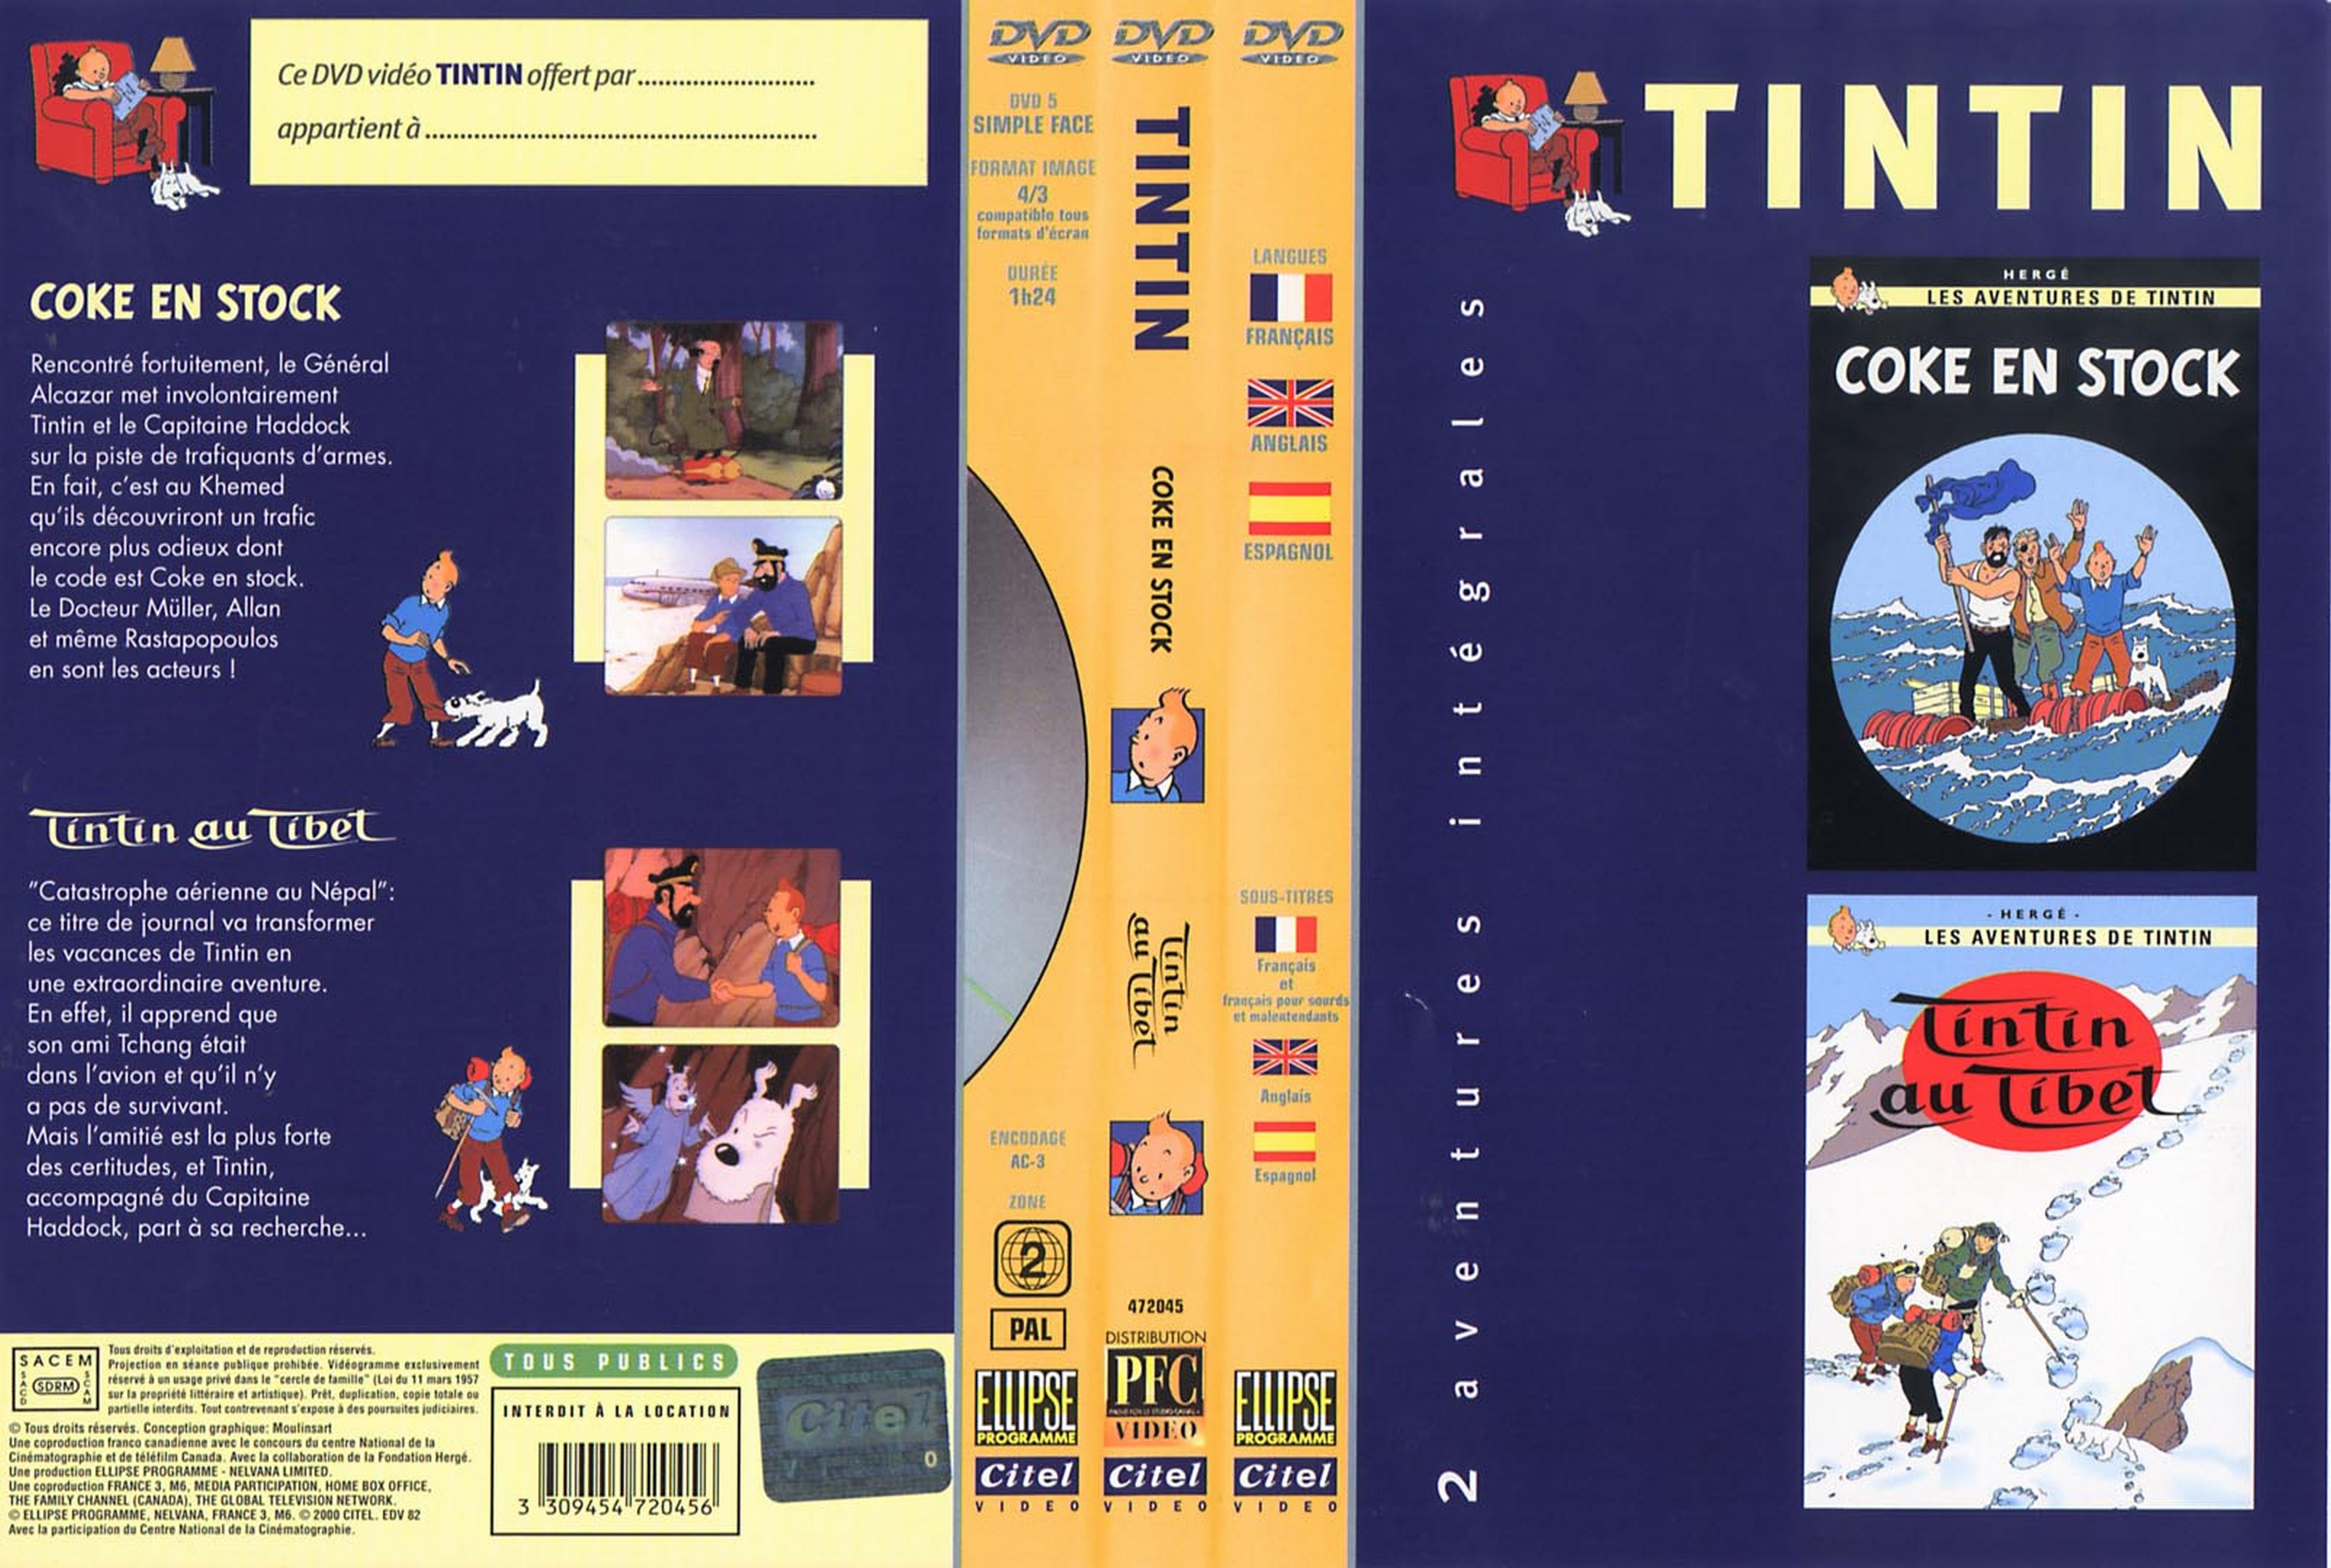 Jaquette DVD Tintin - Coke en stock + Tintin au Tibet